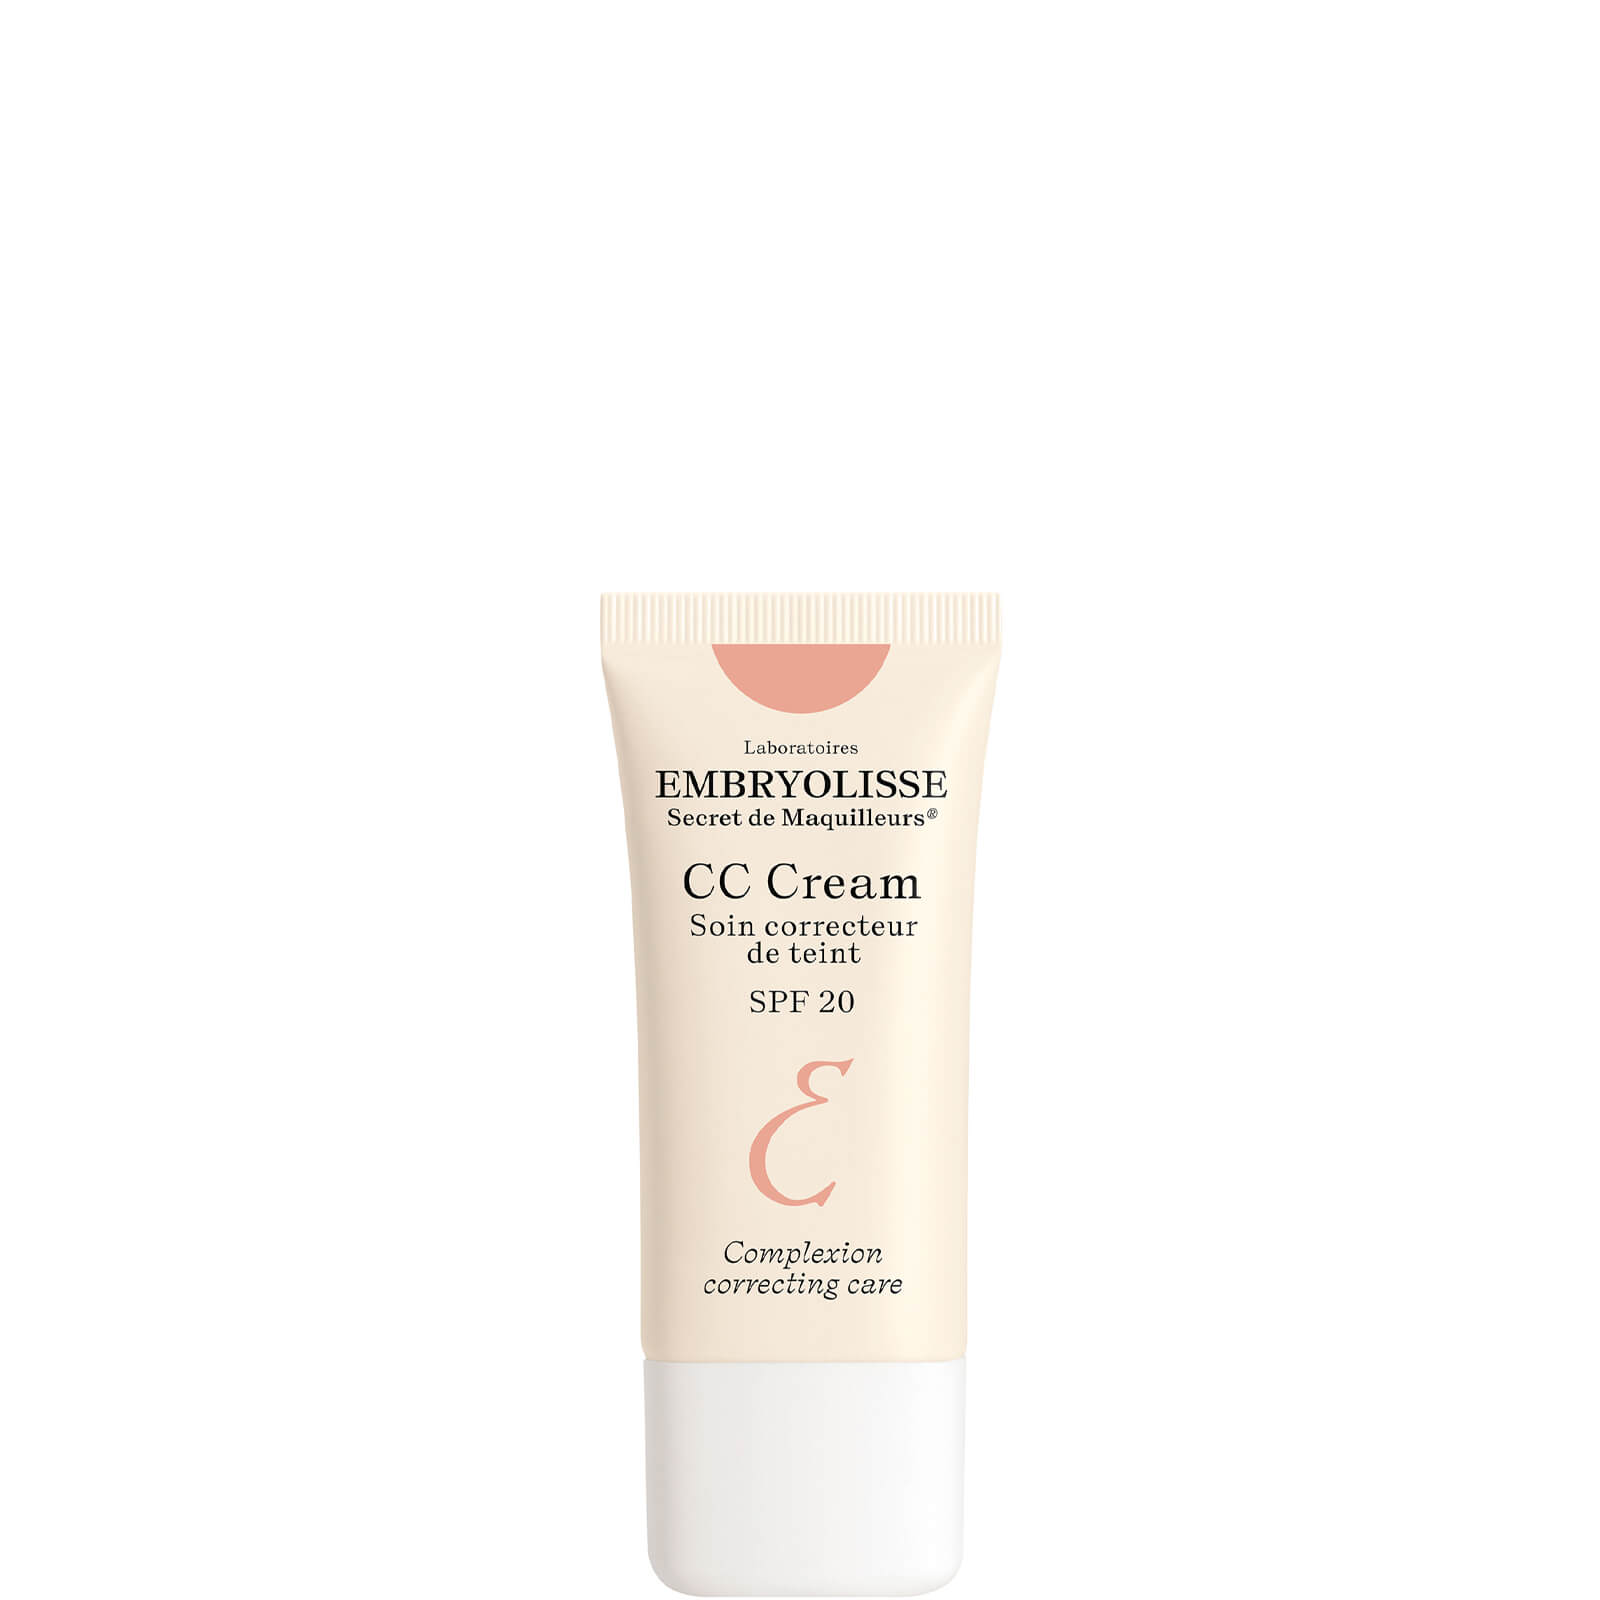 Embryolisse Complexion Correcting Skincare CC Cream SPF20 30 ml von Embryolisse